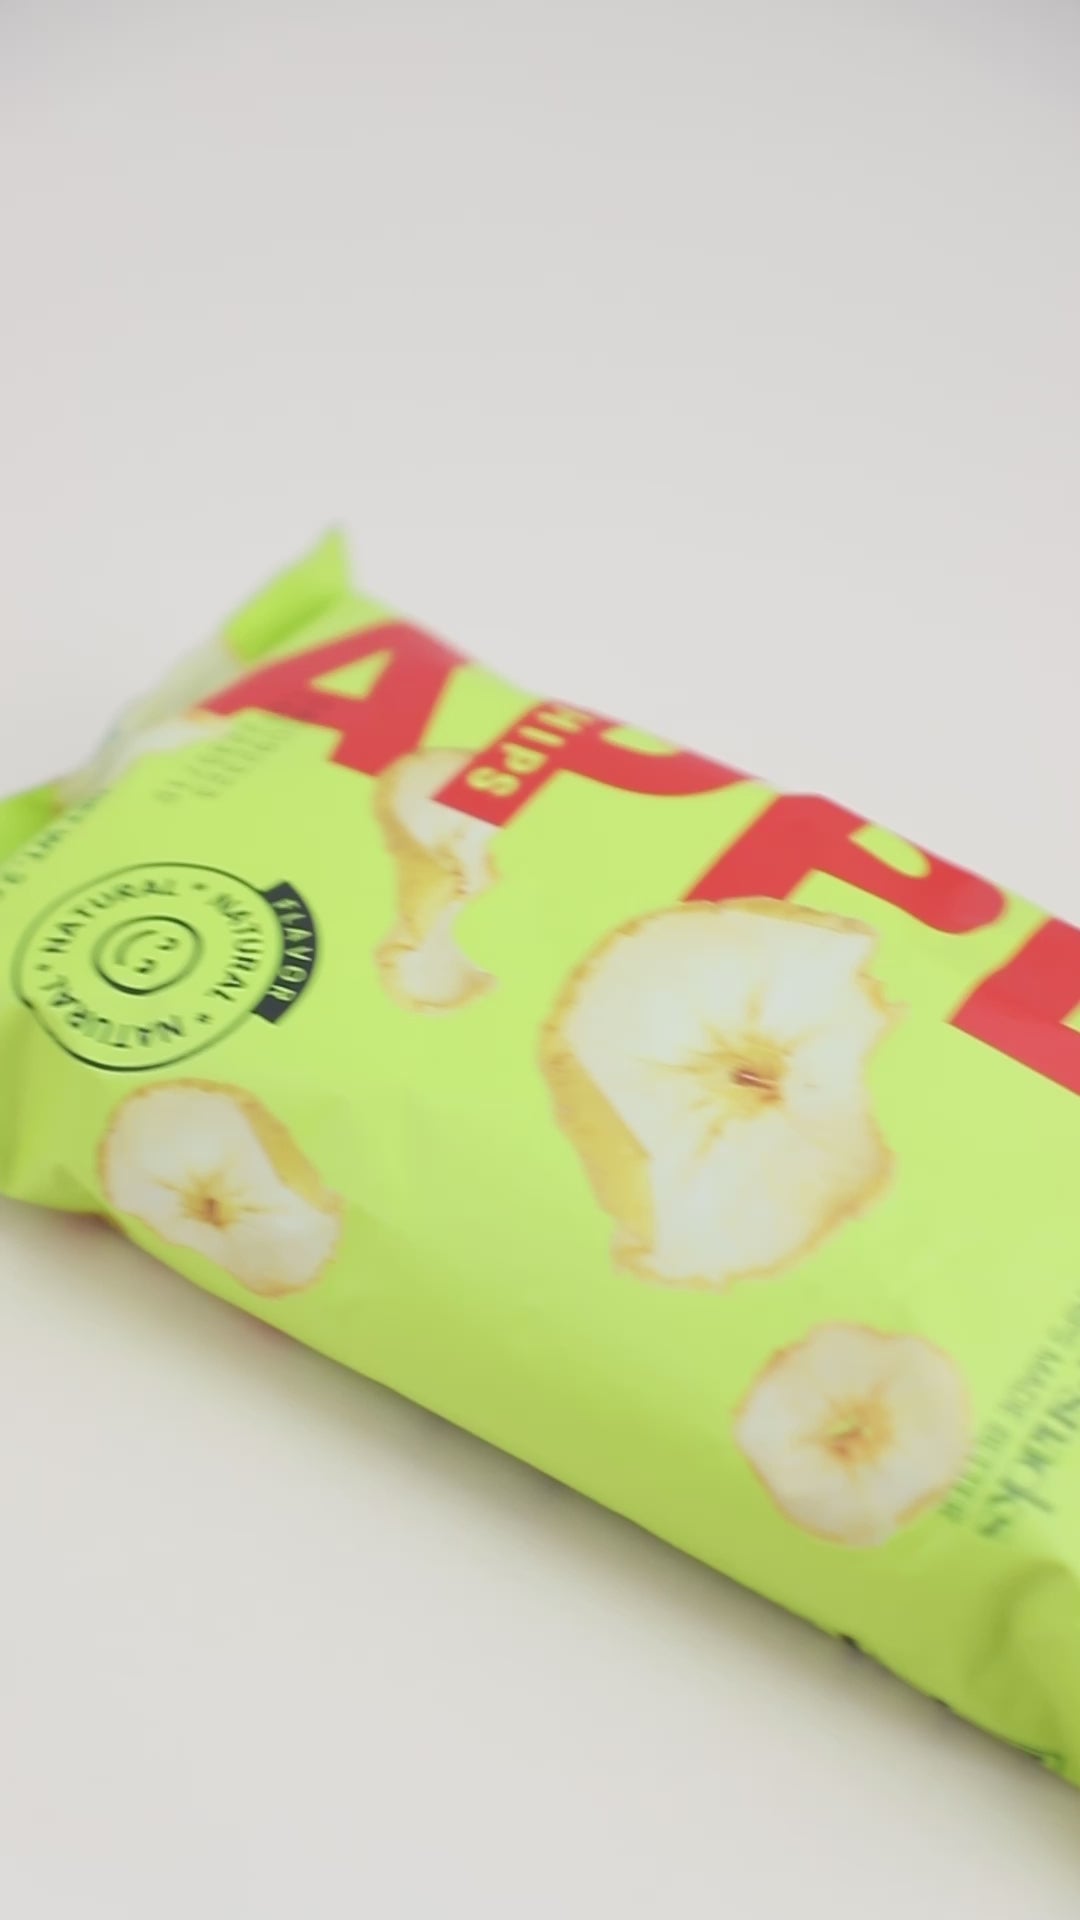 dried apple chips healthy snack crisps - vegan snack - natural snack - gluten free snack - grain free snack 